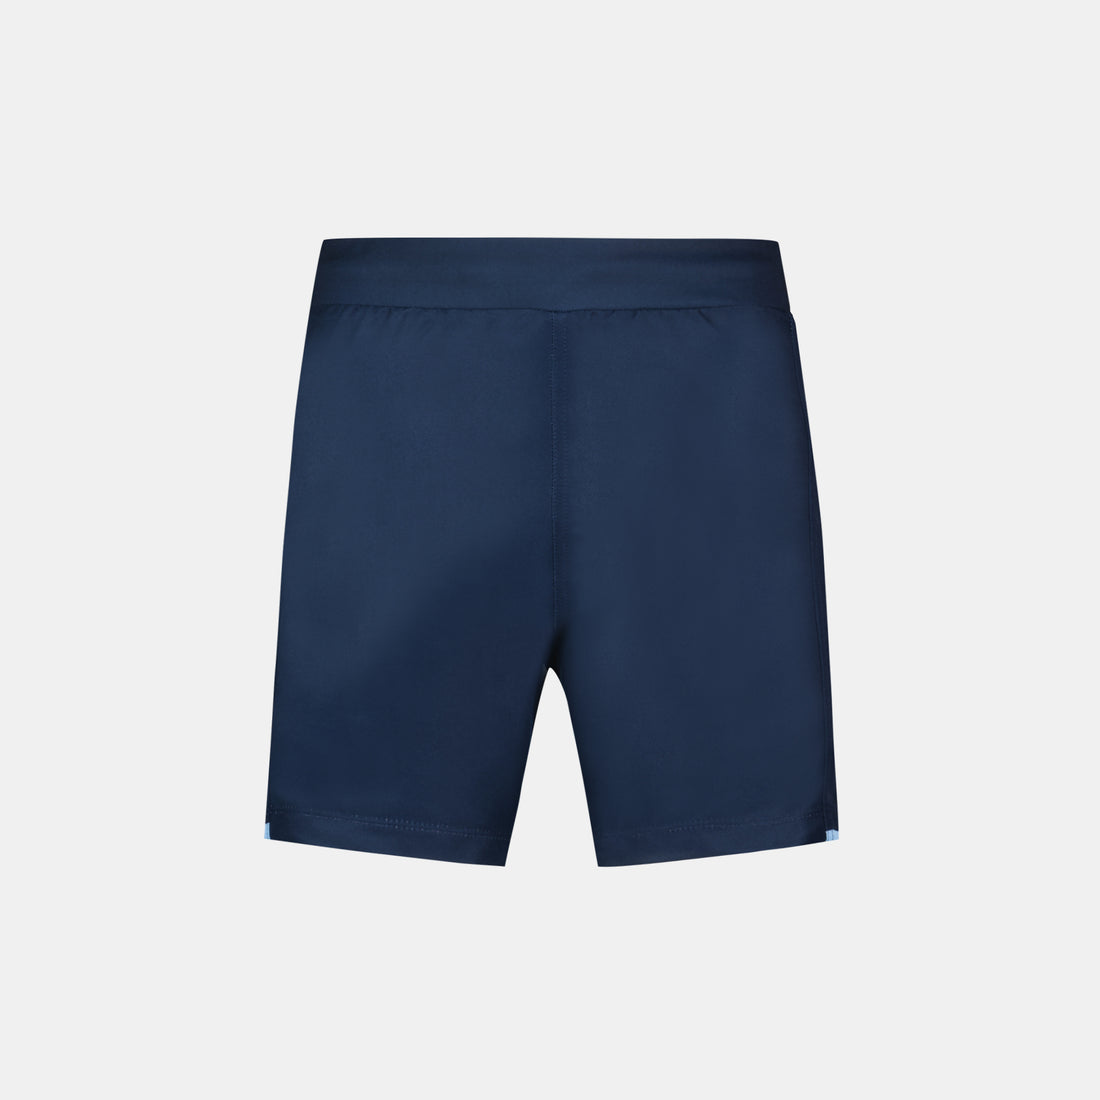 2320334-AB REPLICA Short Enfant blue navy  | Shorts for kids